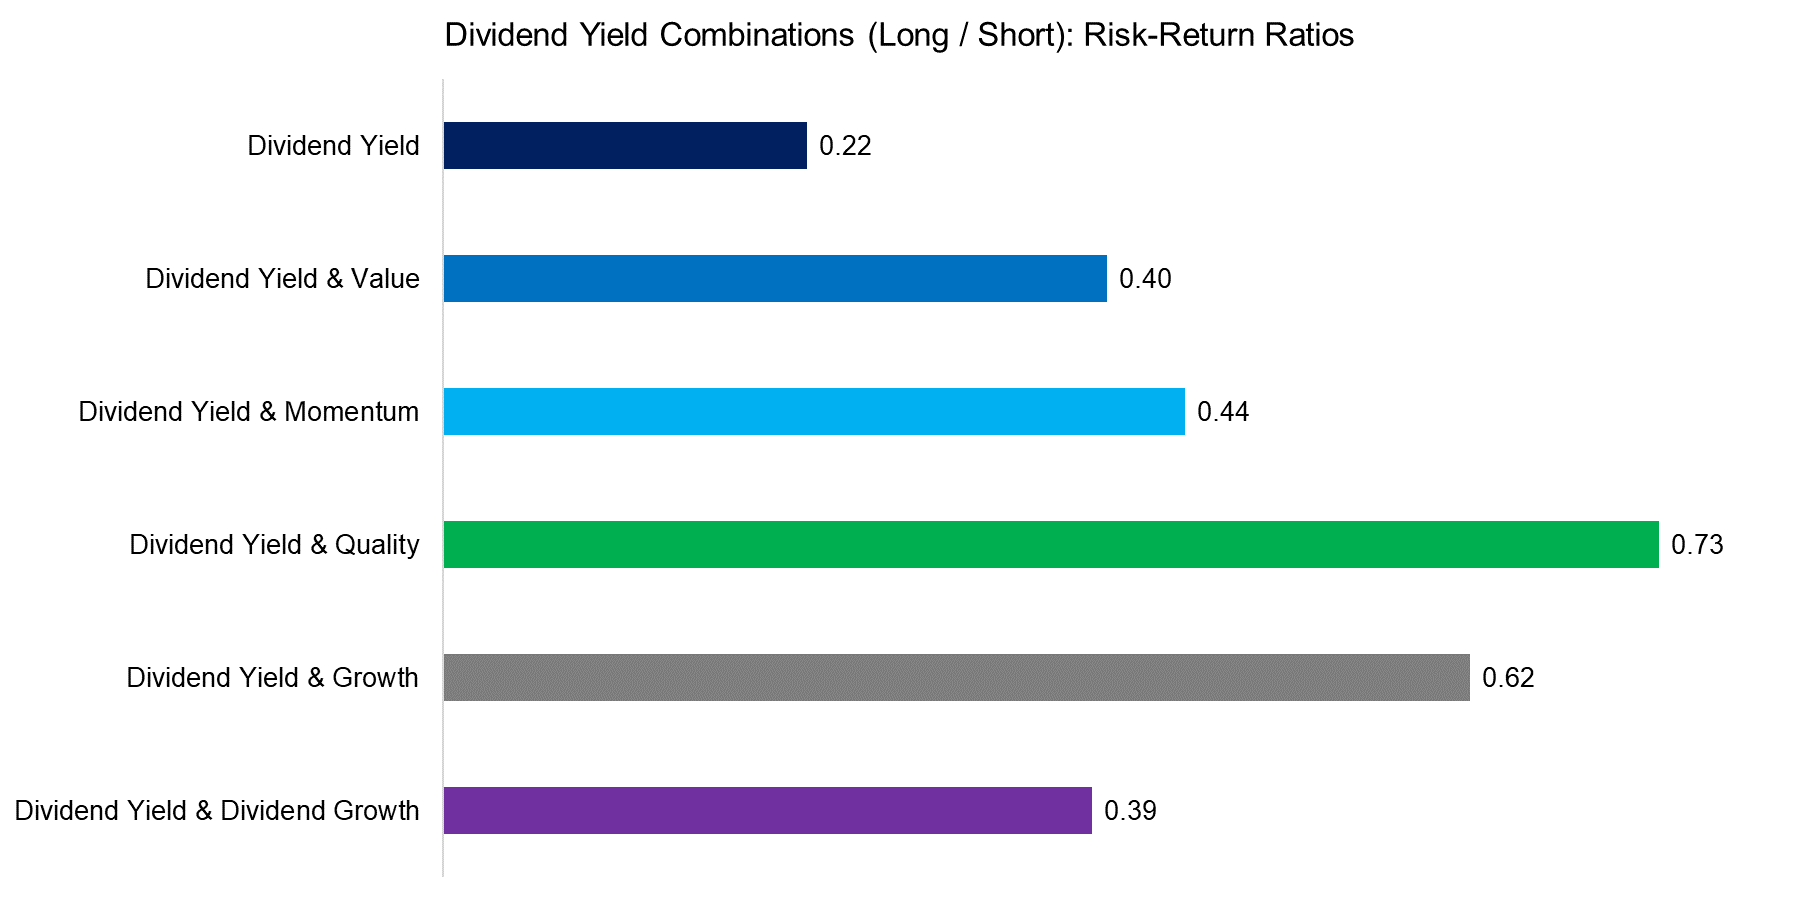 Dividend Yield Combinations (Long Short) Risk-Return Ratios